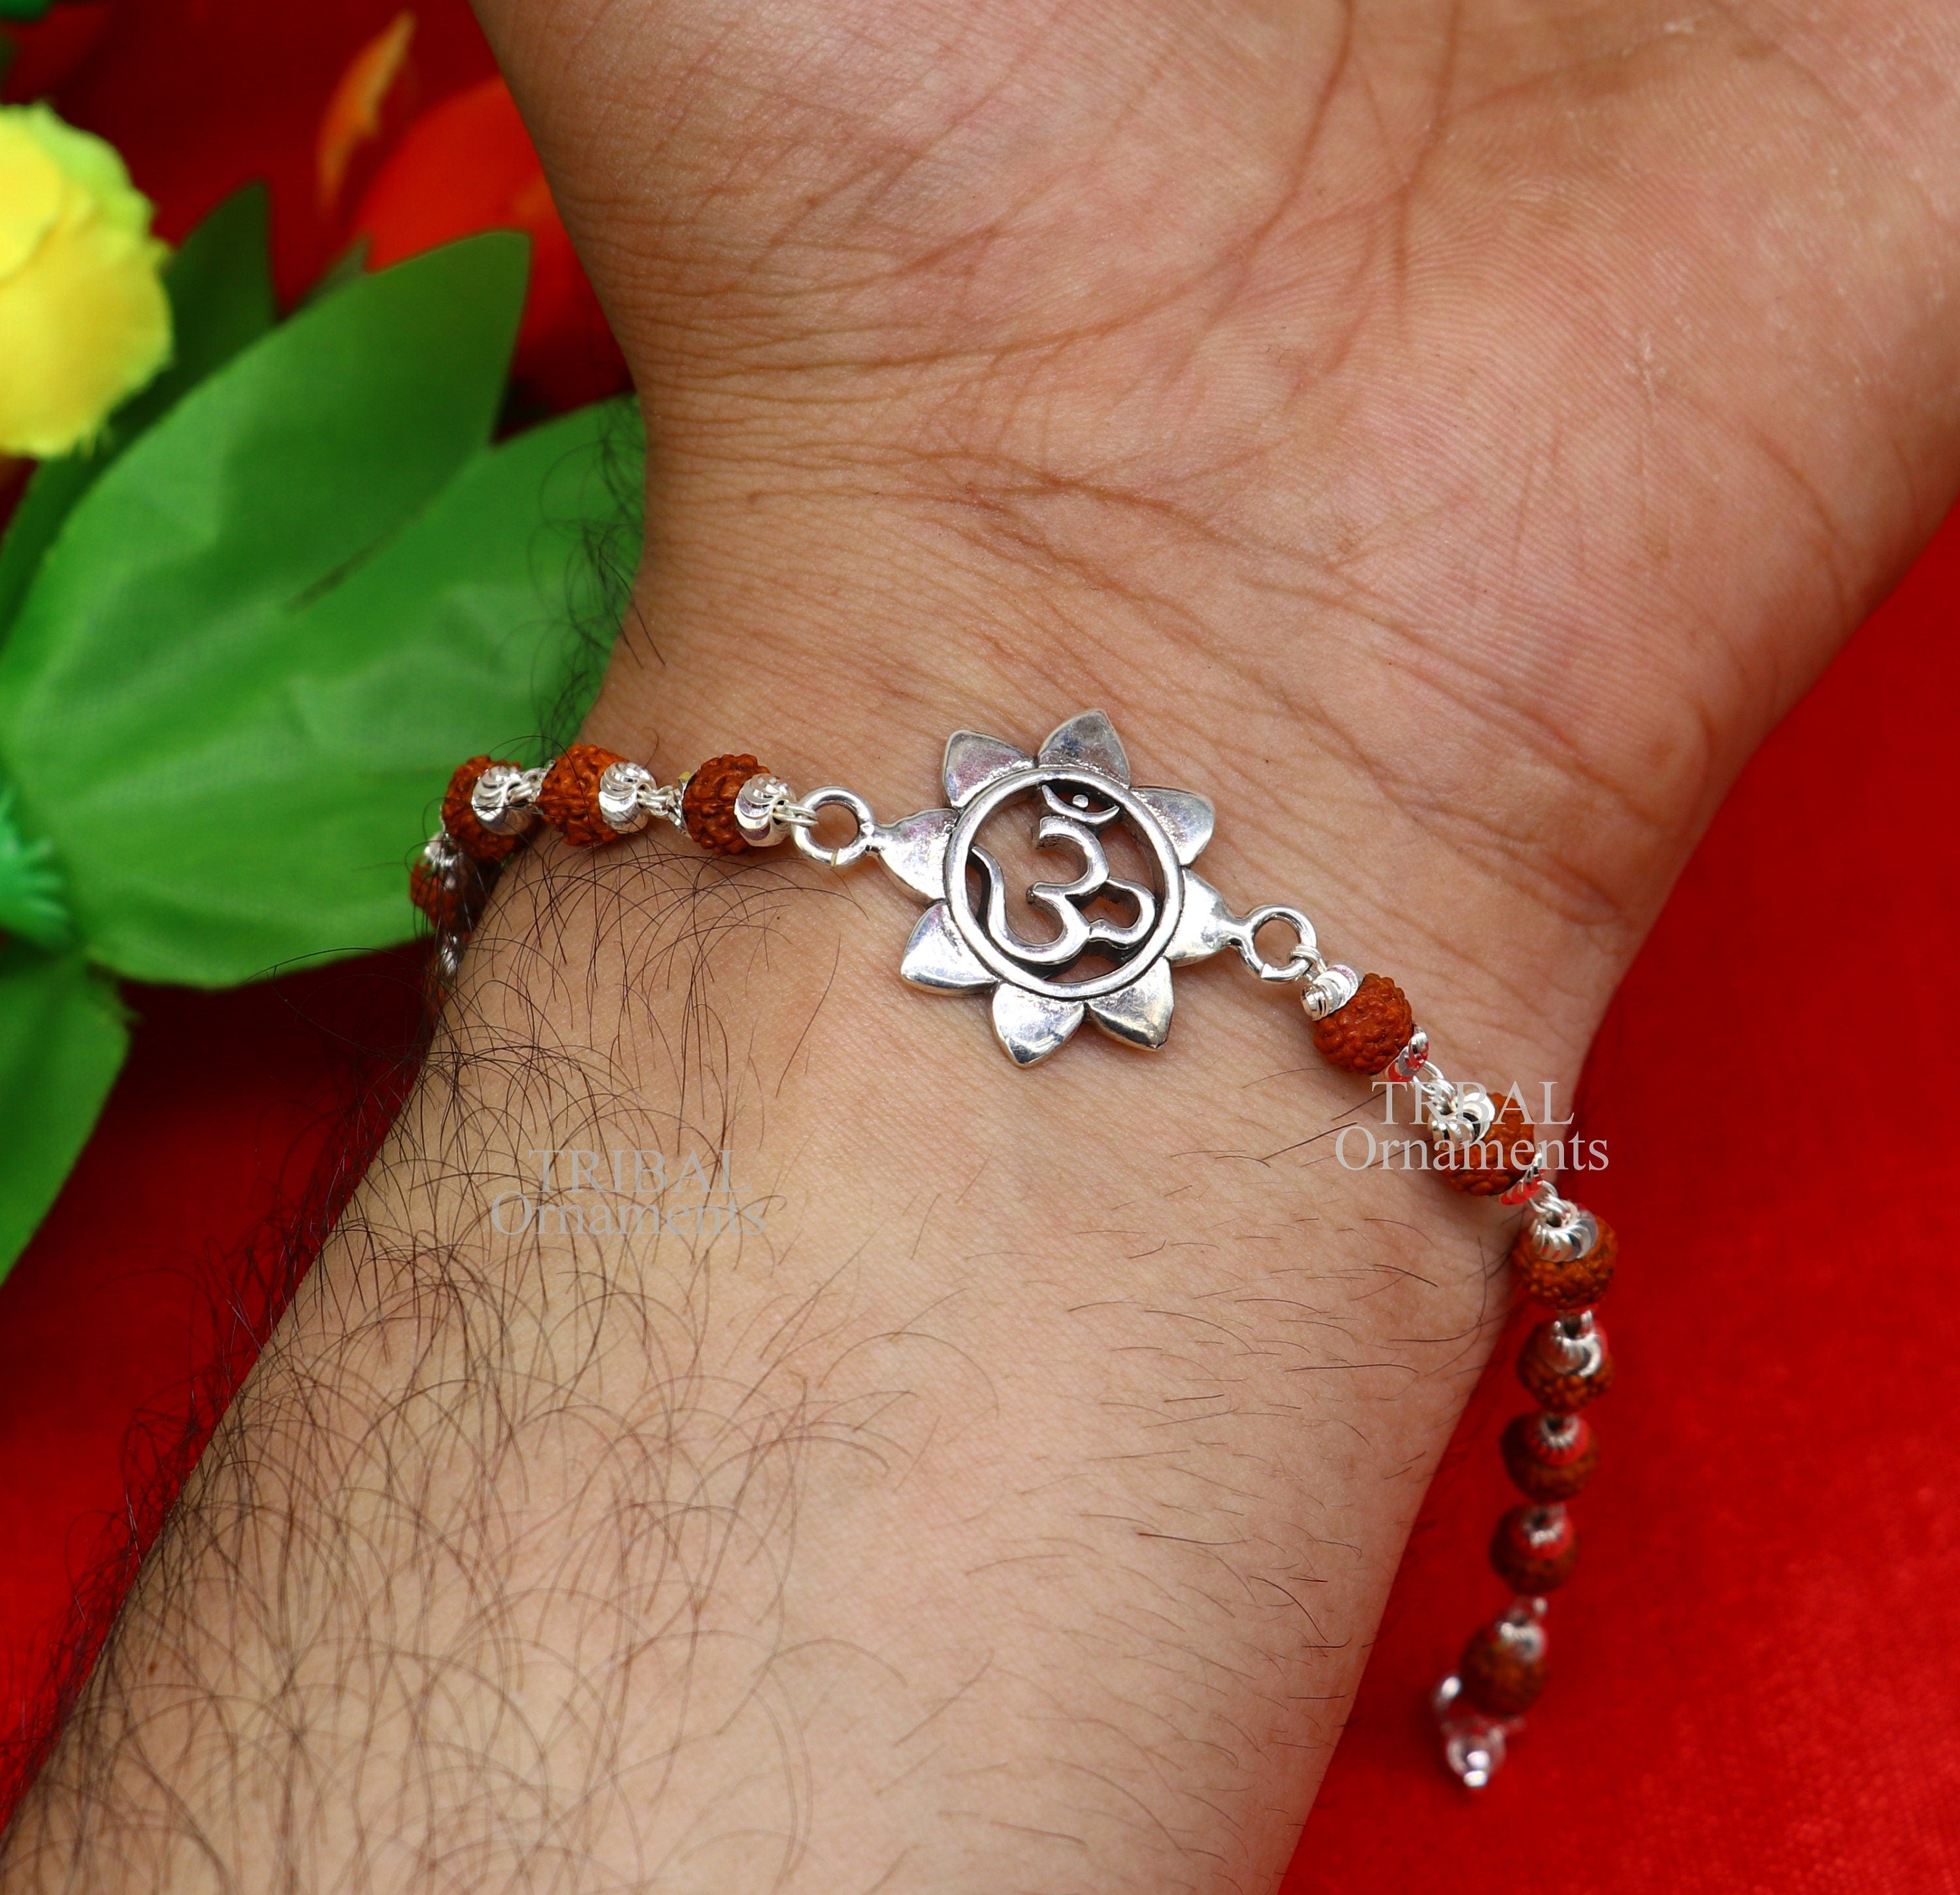 925 sterling silver handmade flower Aum OM design Rakhi bracelet amazing  Rudraksha or Tulsi beaded bracelet use as daily use jewelry rk190  TRIBAL  ORNAMENTS